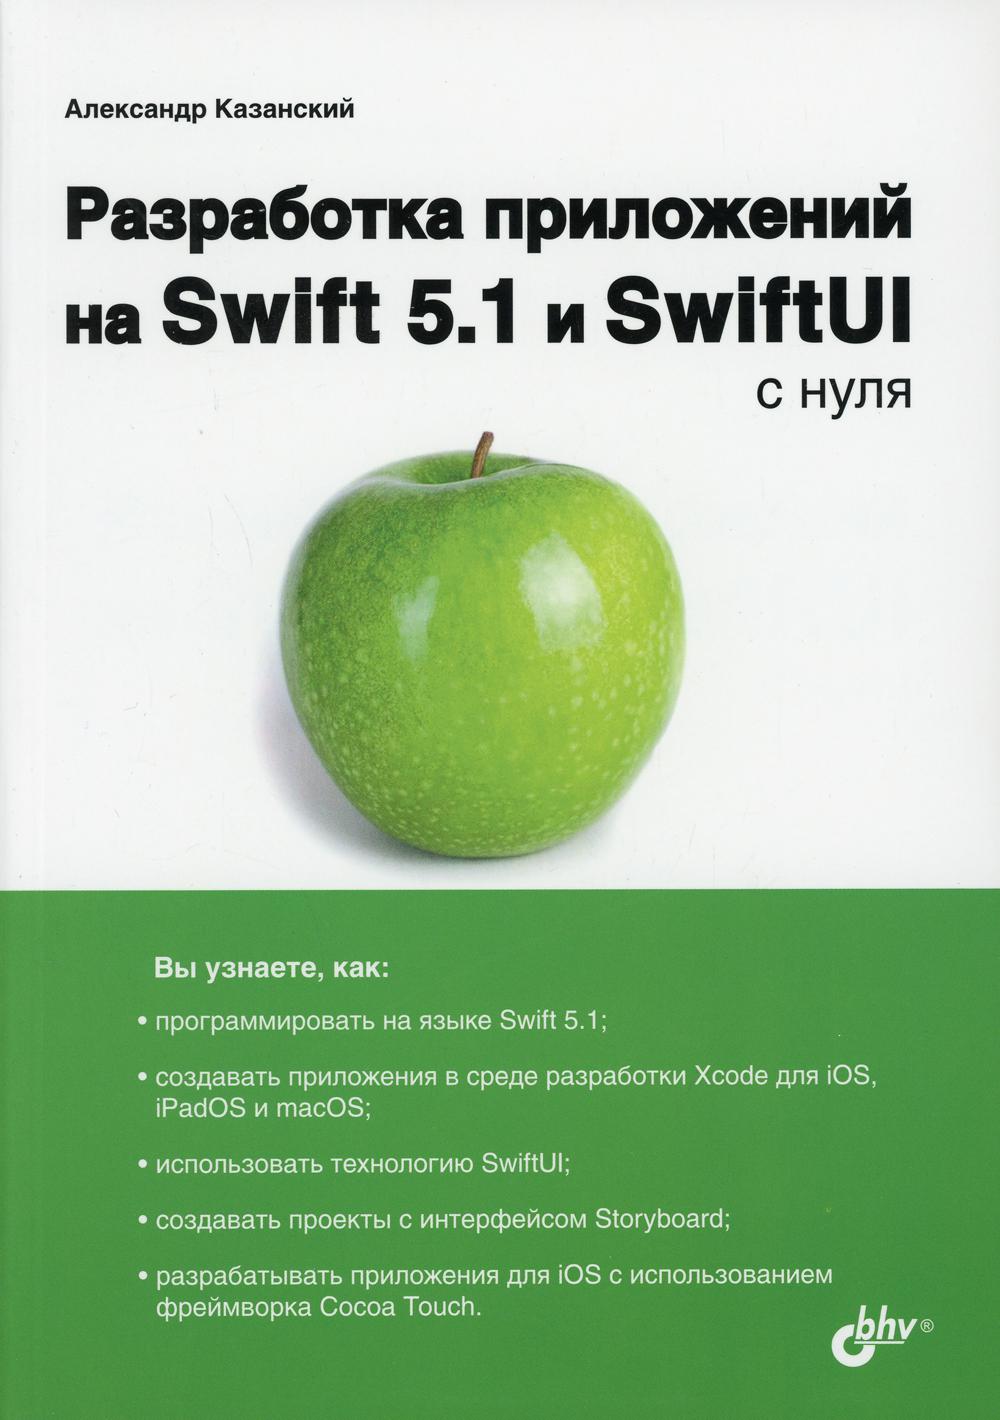    Swift 5.1  SwiftUI  .